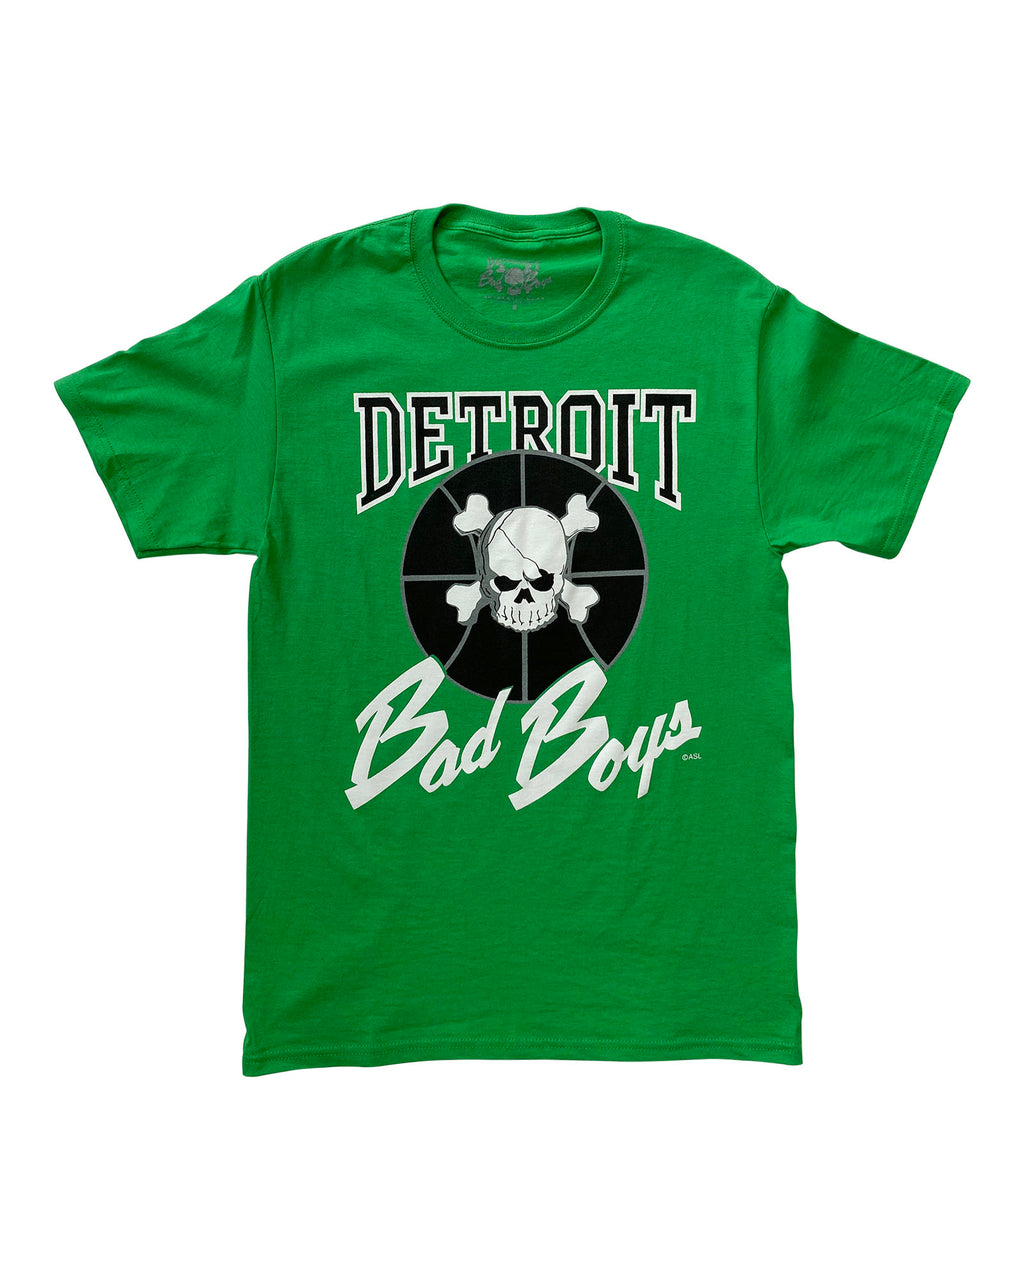 Authentic Detroit Bad Boys Green T-Shirt